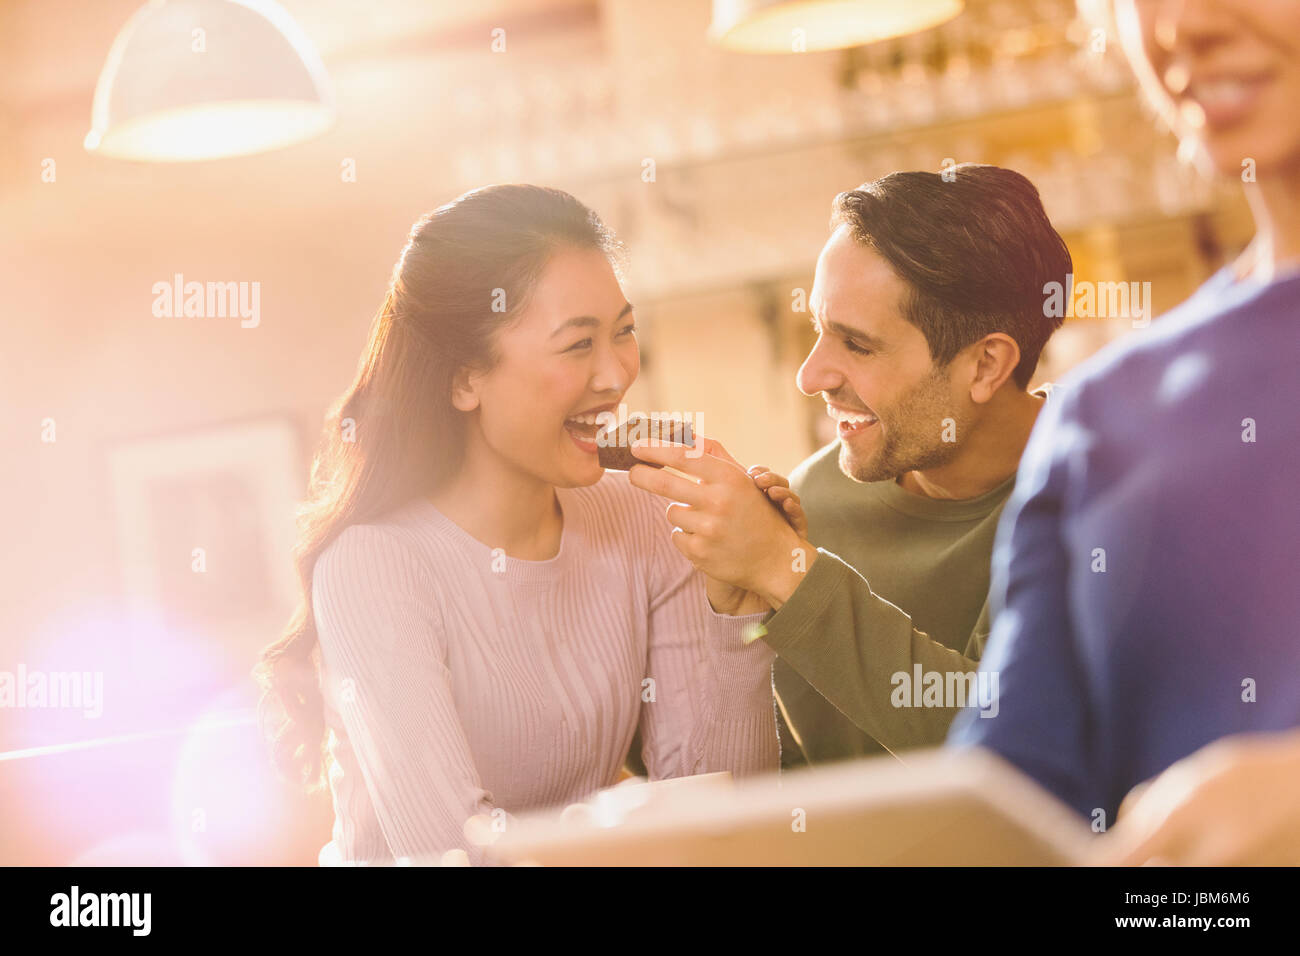 Playful boyfriend feeding brownie to girlfriend at cafe Stock Photo